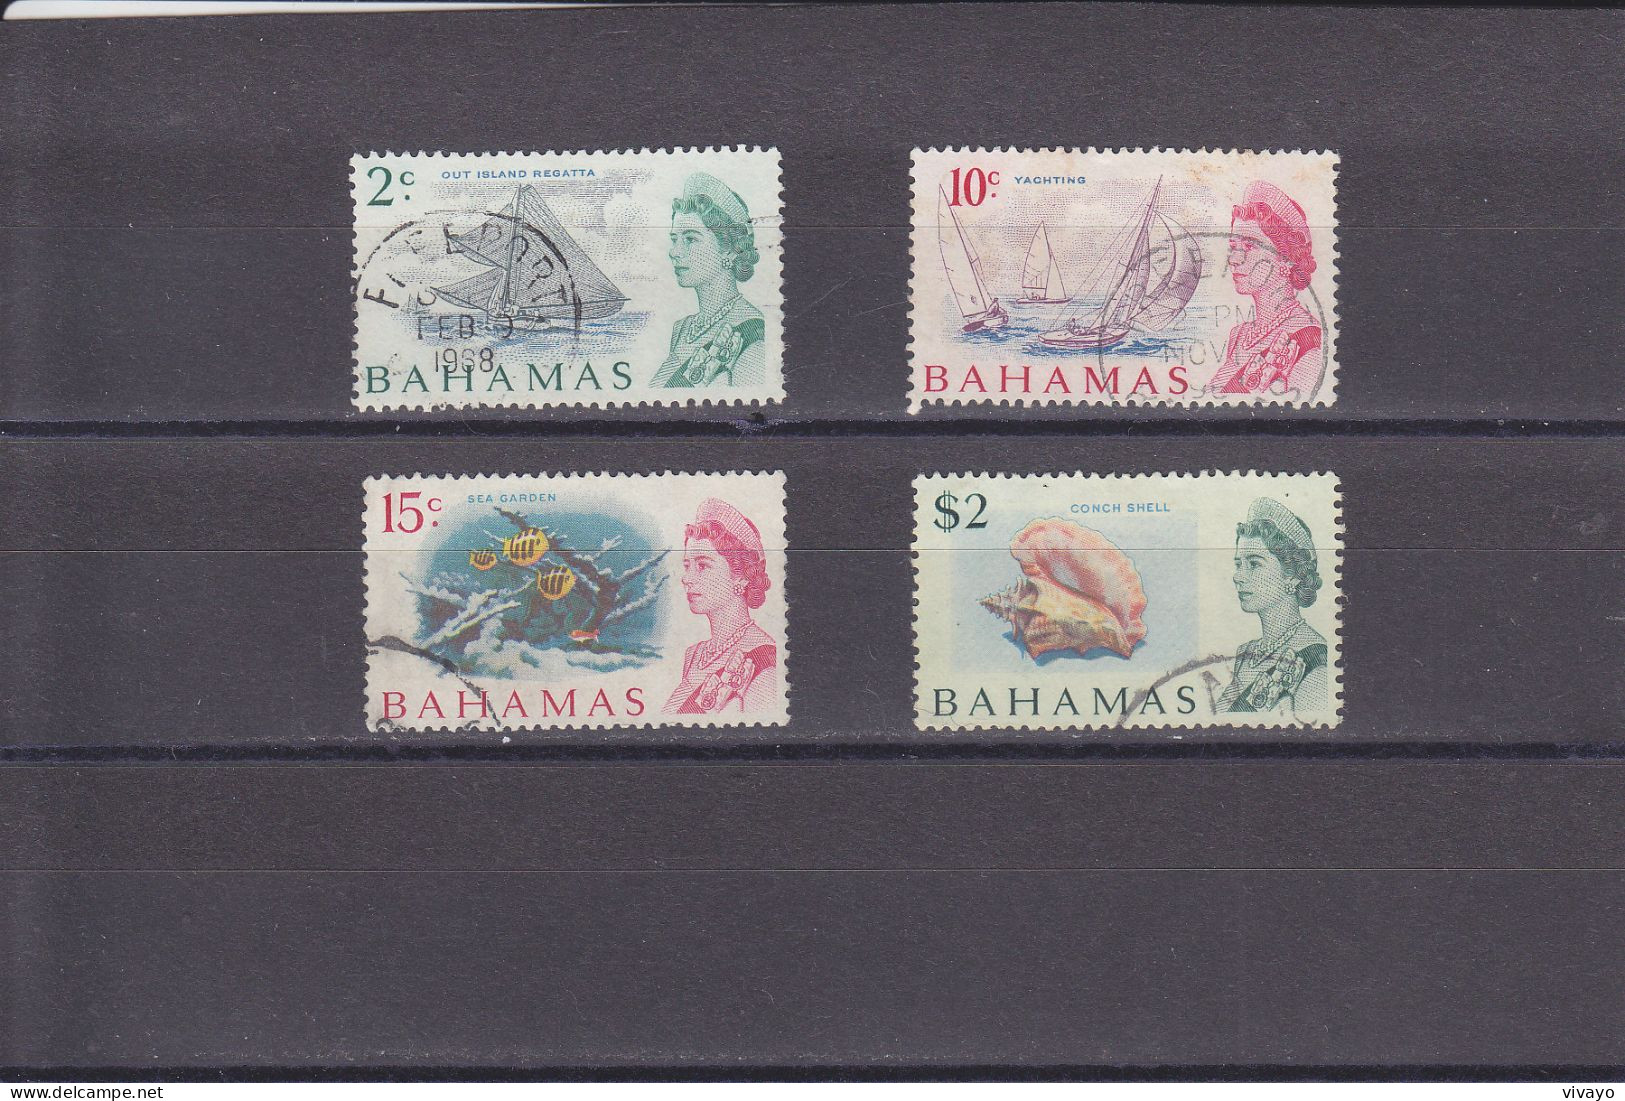 BAHAMAS - 1967 - O/FINE CANCELLED -  QEII & REGATTA, YACHTING, SEA GARDEN, SHELL  Yv. 242, 247, 250, 254 - 1963-1973 Autonomie Interne